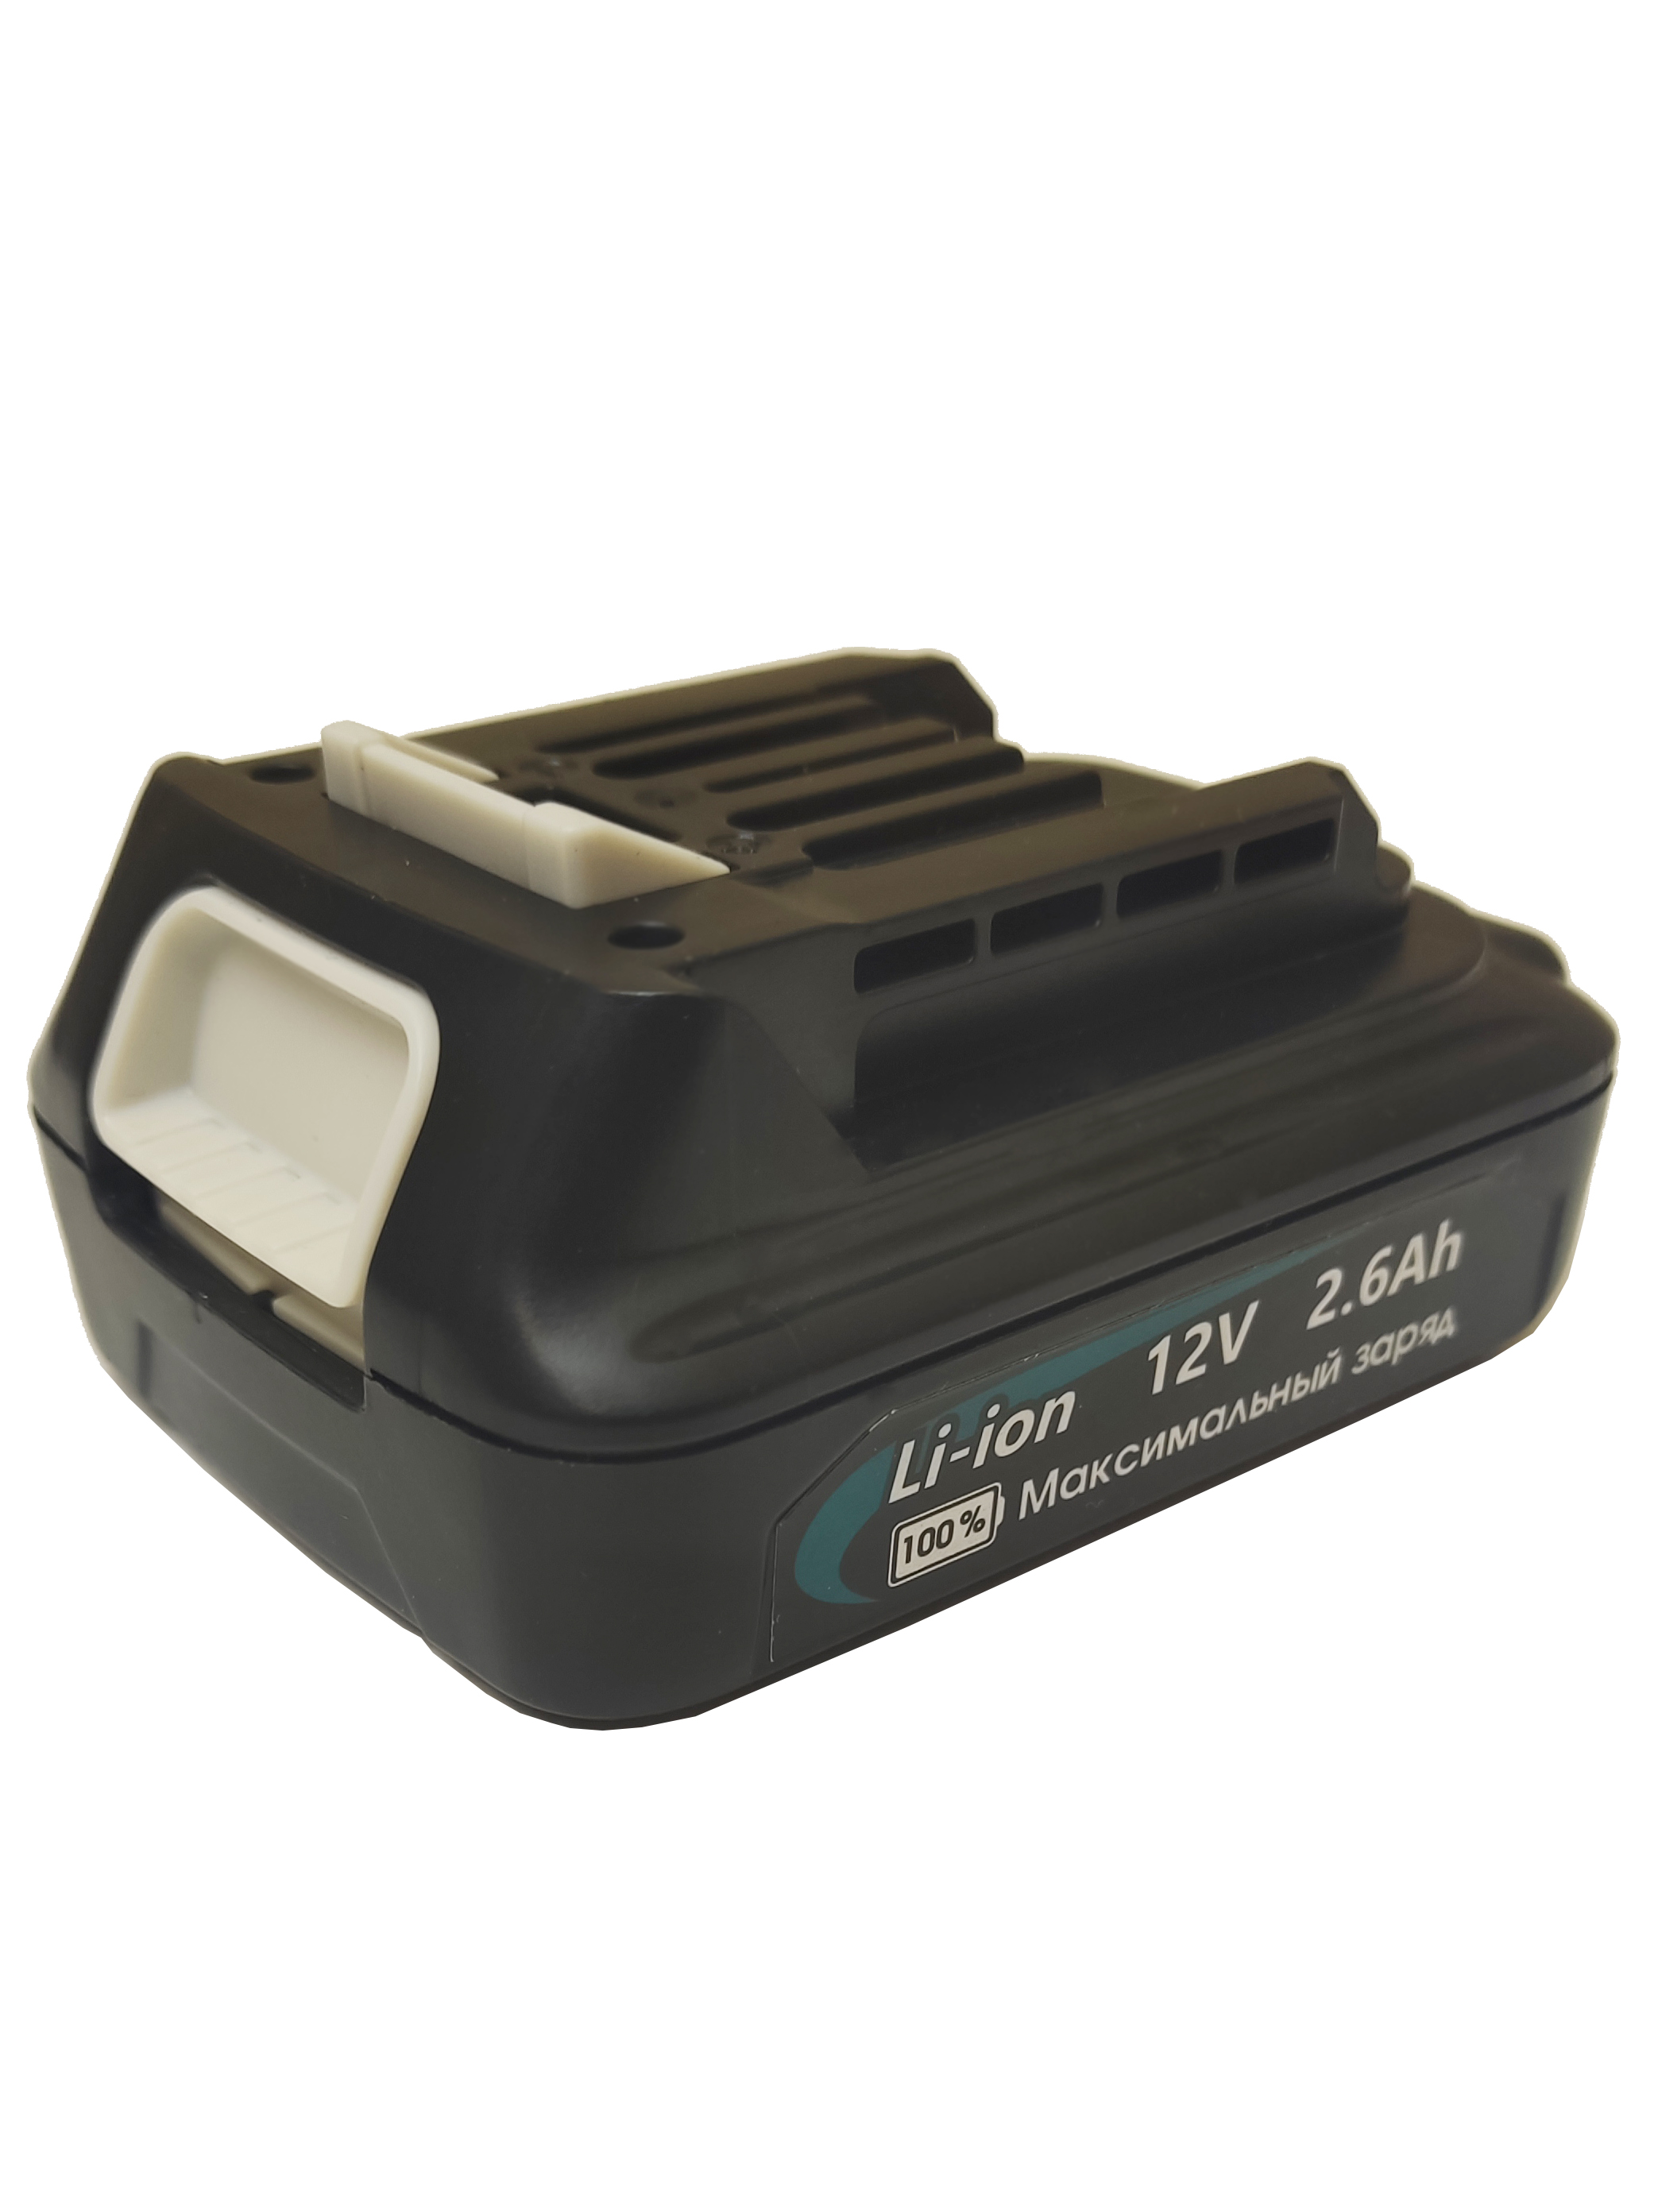 Аккумулятор для электроинструментов Makita BL1020B 12V 2.6Ah BL1015 BL1021B BL1041 BL1016 аккумуляторные ножницы для живой изгороди graphite